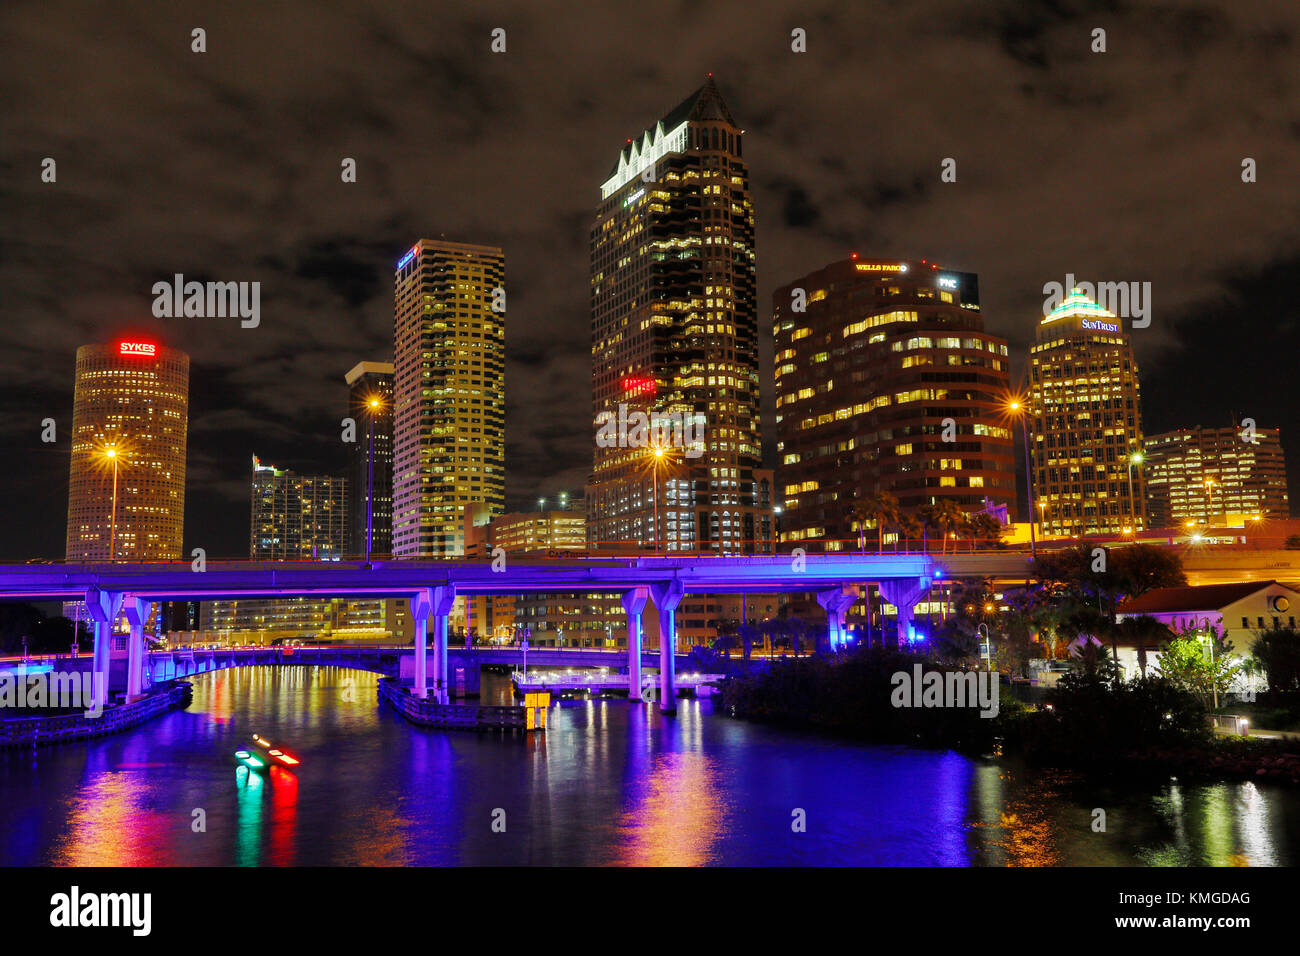 JANUARY 25, 2017: The skyline of Tampa, Florida illuminated at night. Stock Photo